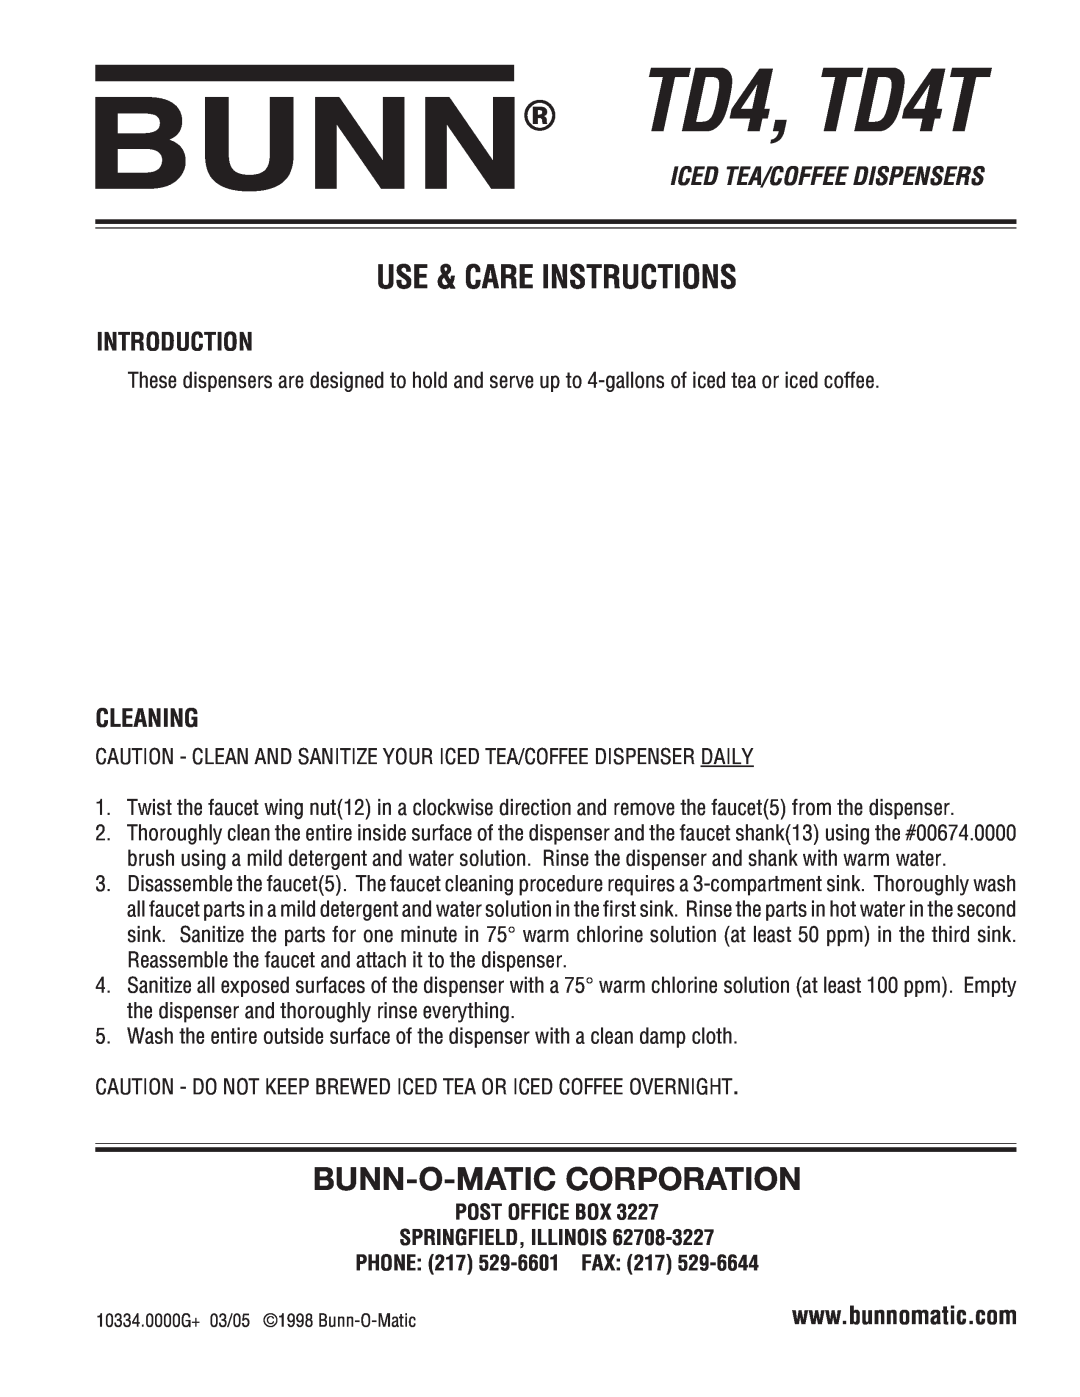 Bunn manual Use & Care Instructions, Bunn-O-Maticcorporation, Post Office Box Springfield, Illinois, Fax, TD4, TD4T 